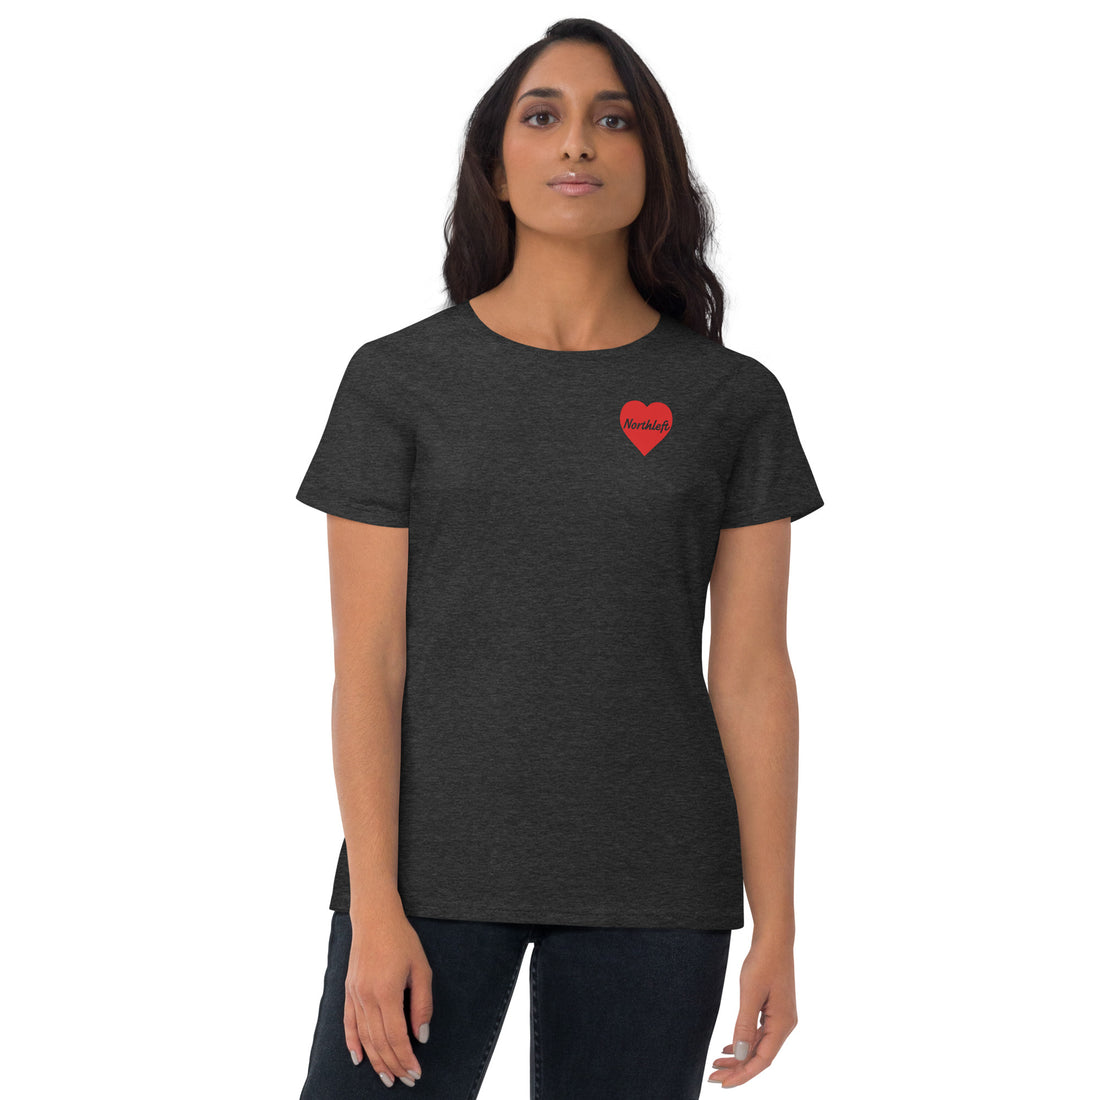 The Maggie – I Heart Northleft Women's T-Shirt